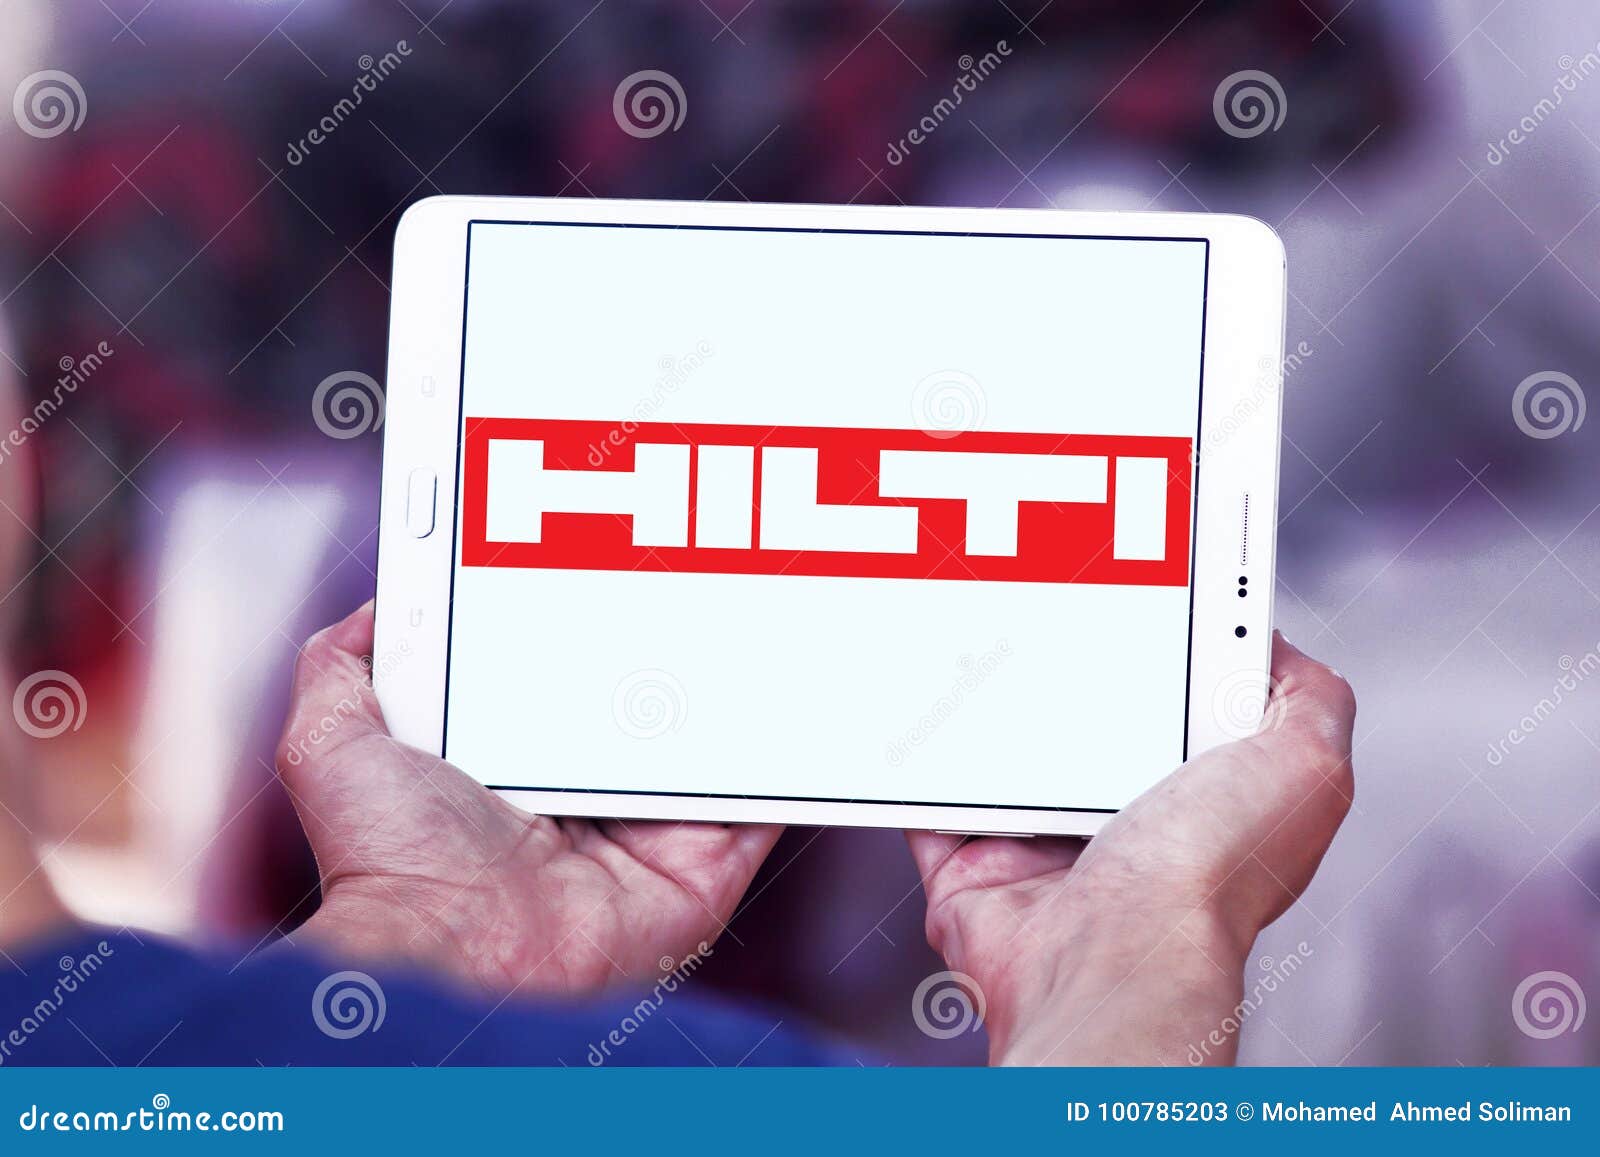 Hilti company logo editorial stock photo. Image of icons - 100785203